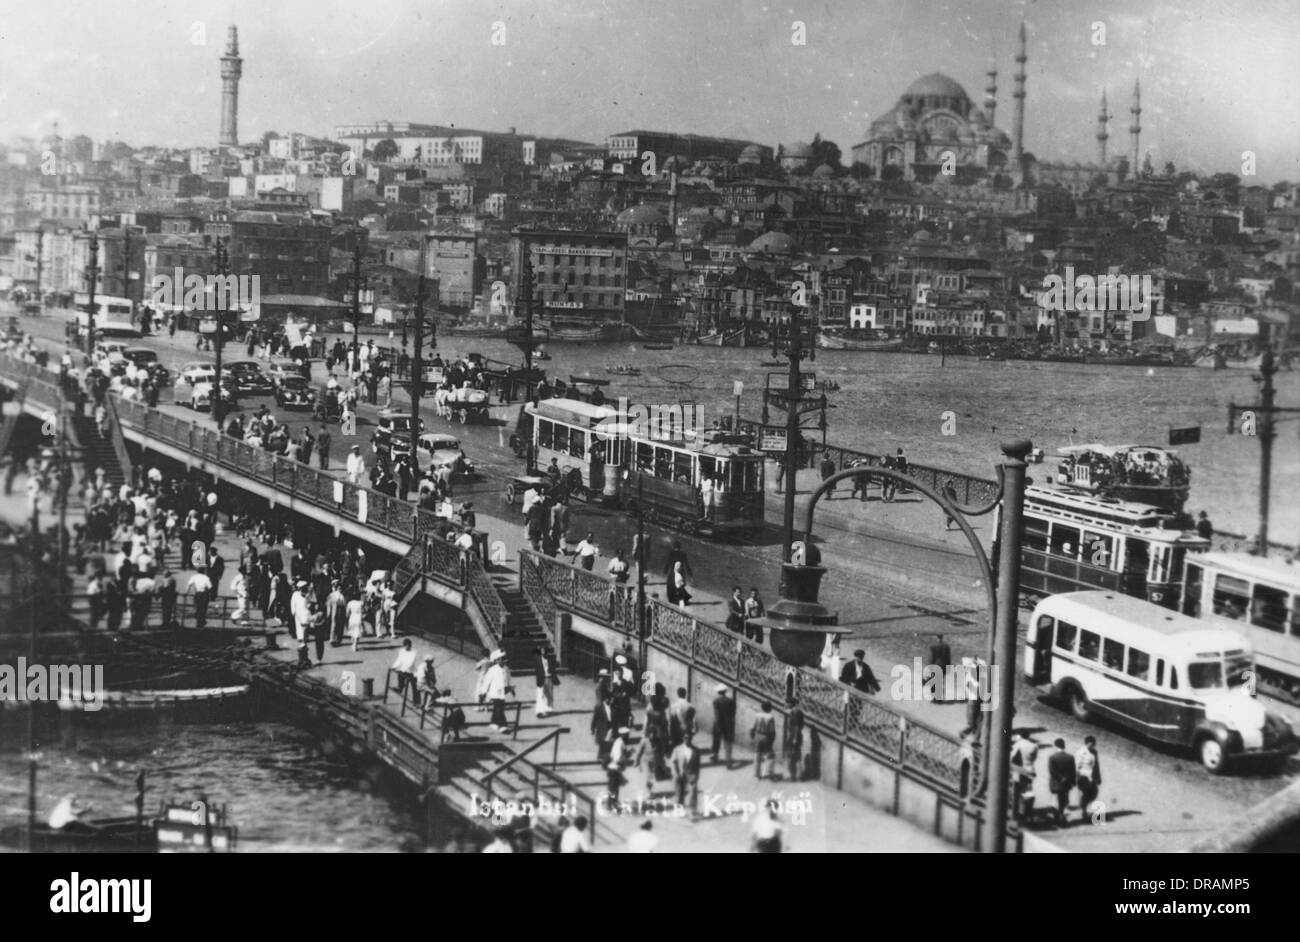 Istanbul - Galata Bridge Stock Photo